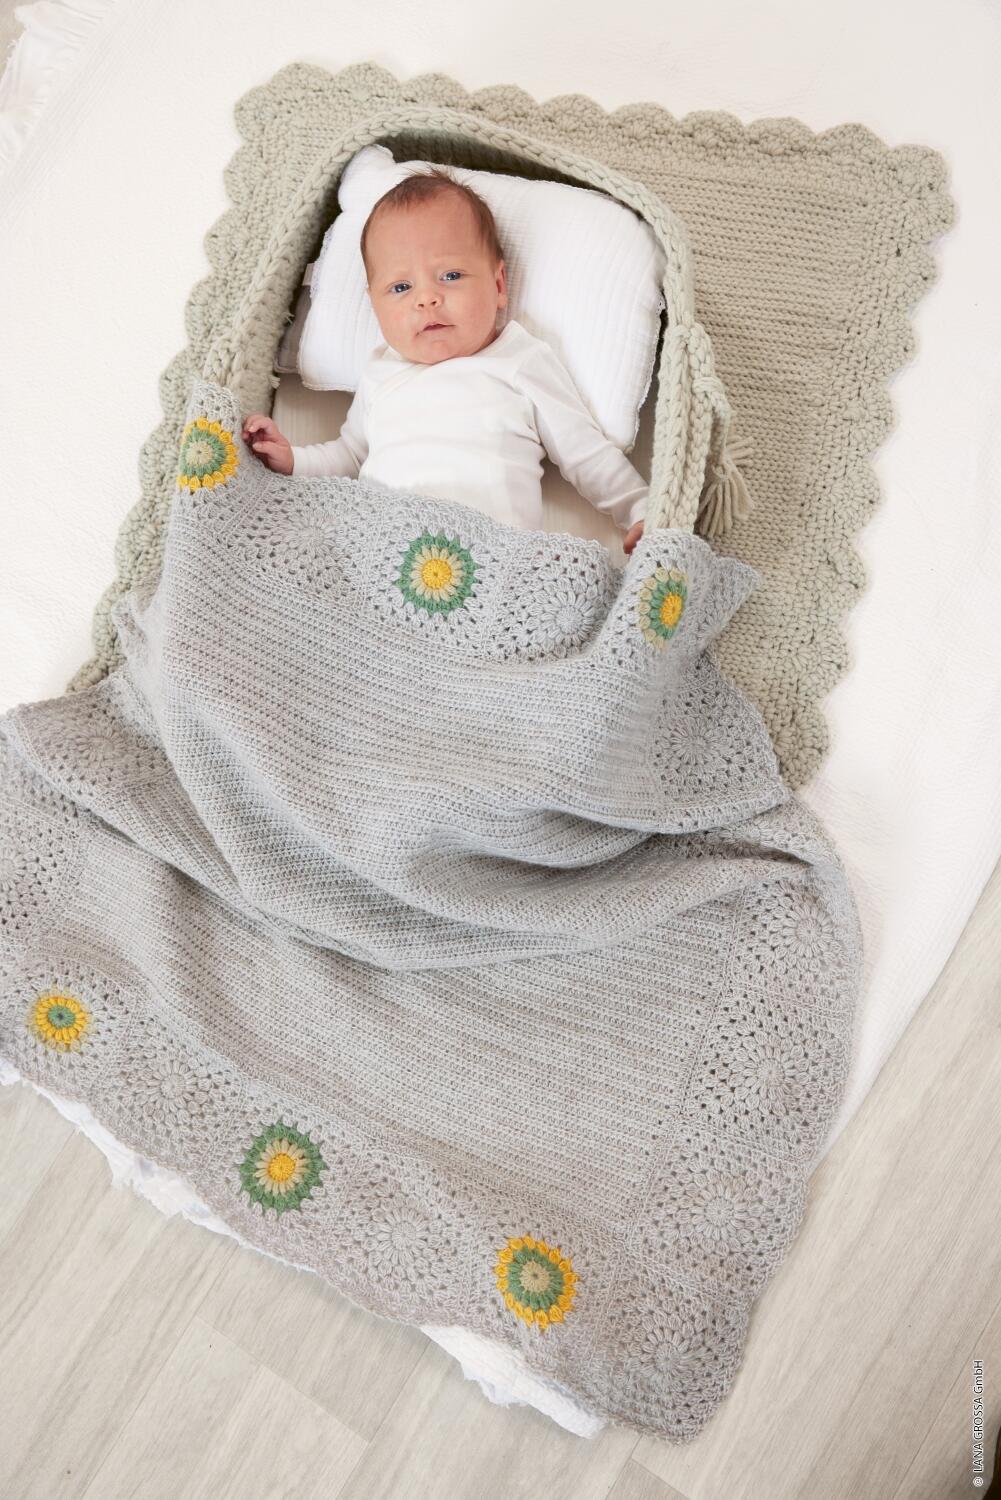 Lana Grossa Infanti 19 - Zauberhafte Babymode Teppich, Decke und Babykorb